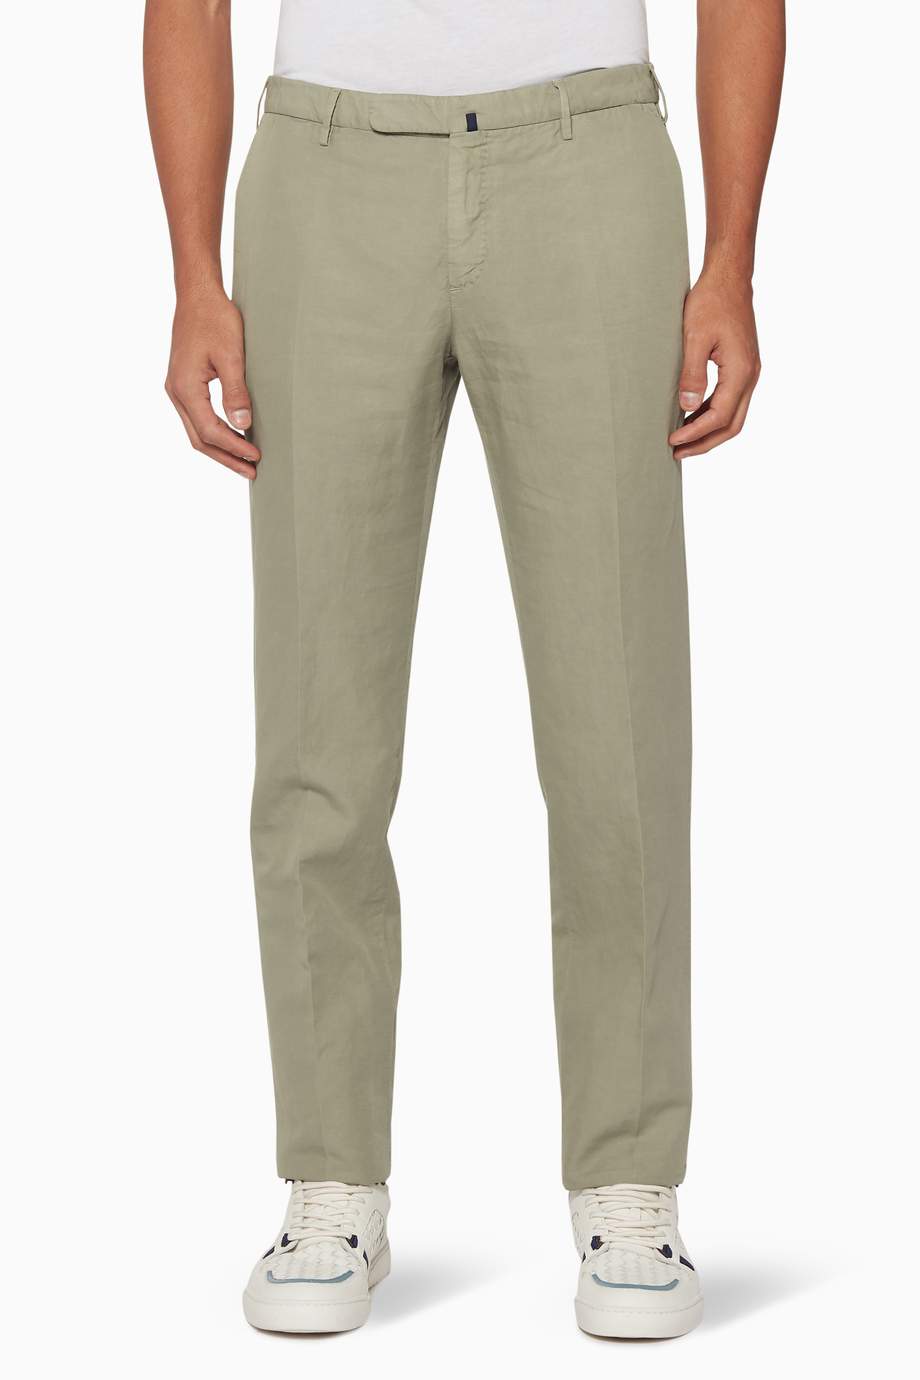 Shop Slowear Green Light-Green Slim-Fit Chino Pants for Men | Ounass UAE